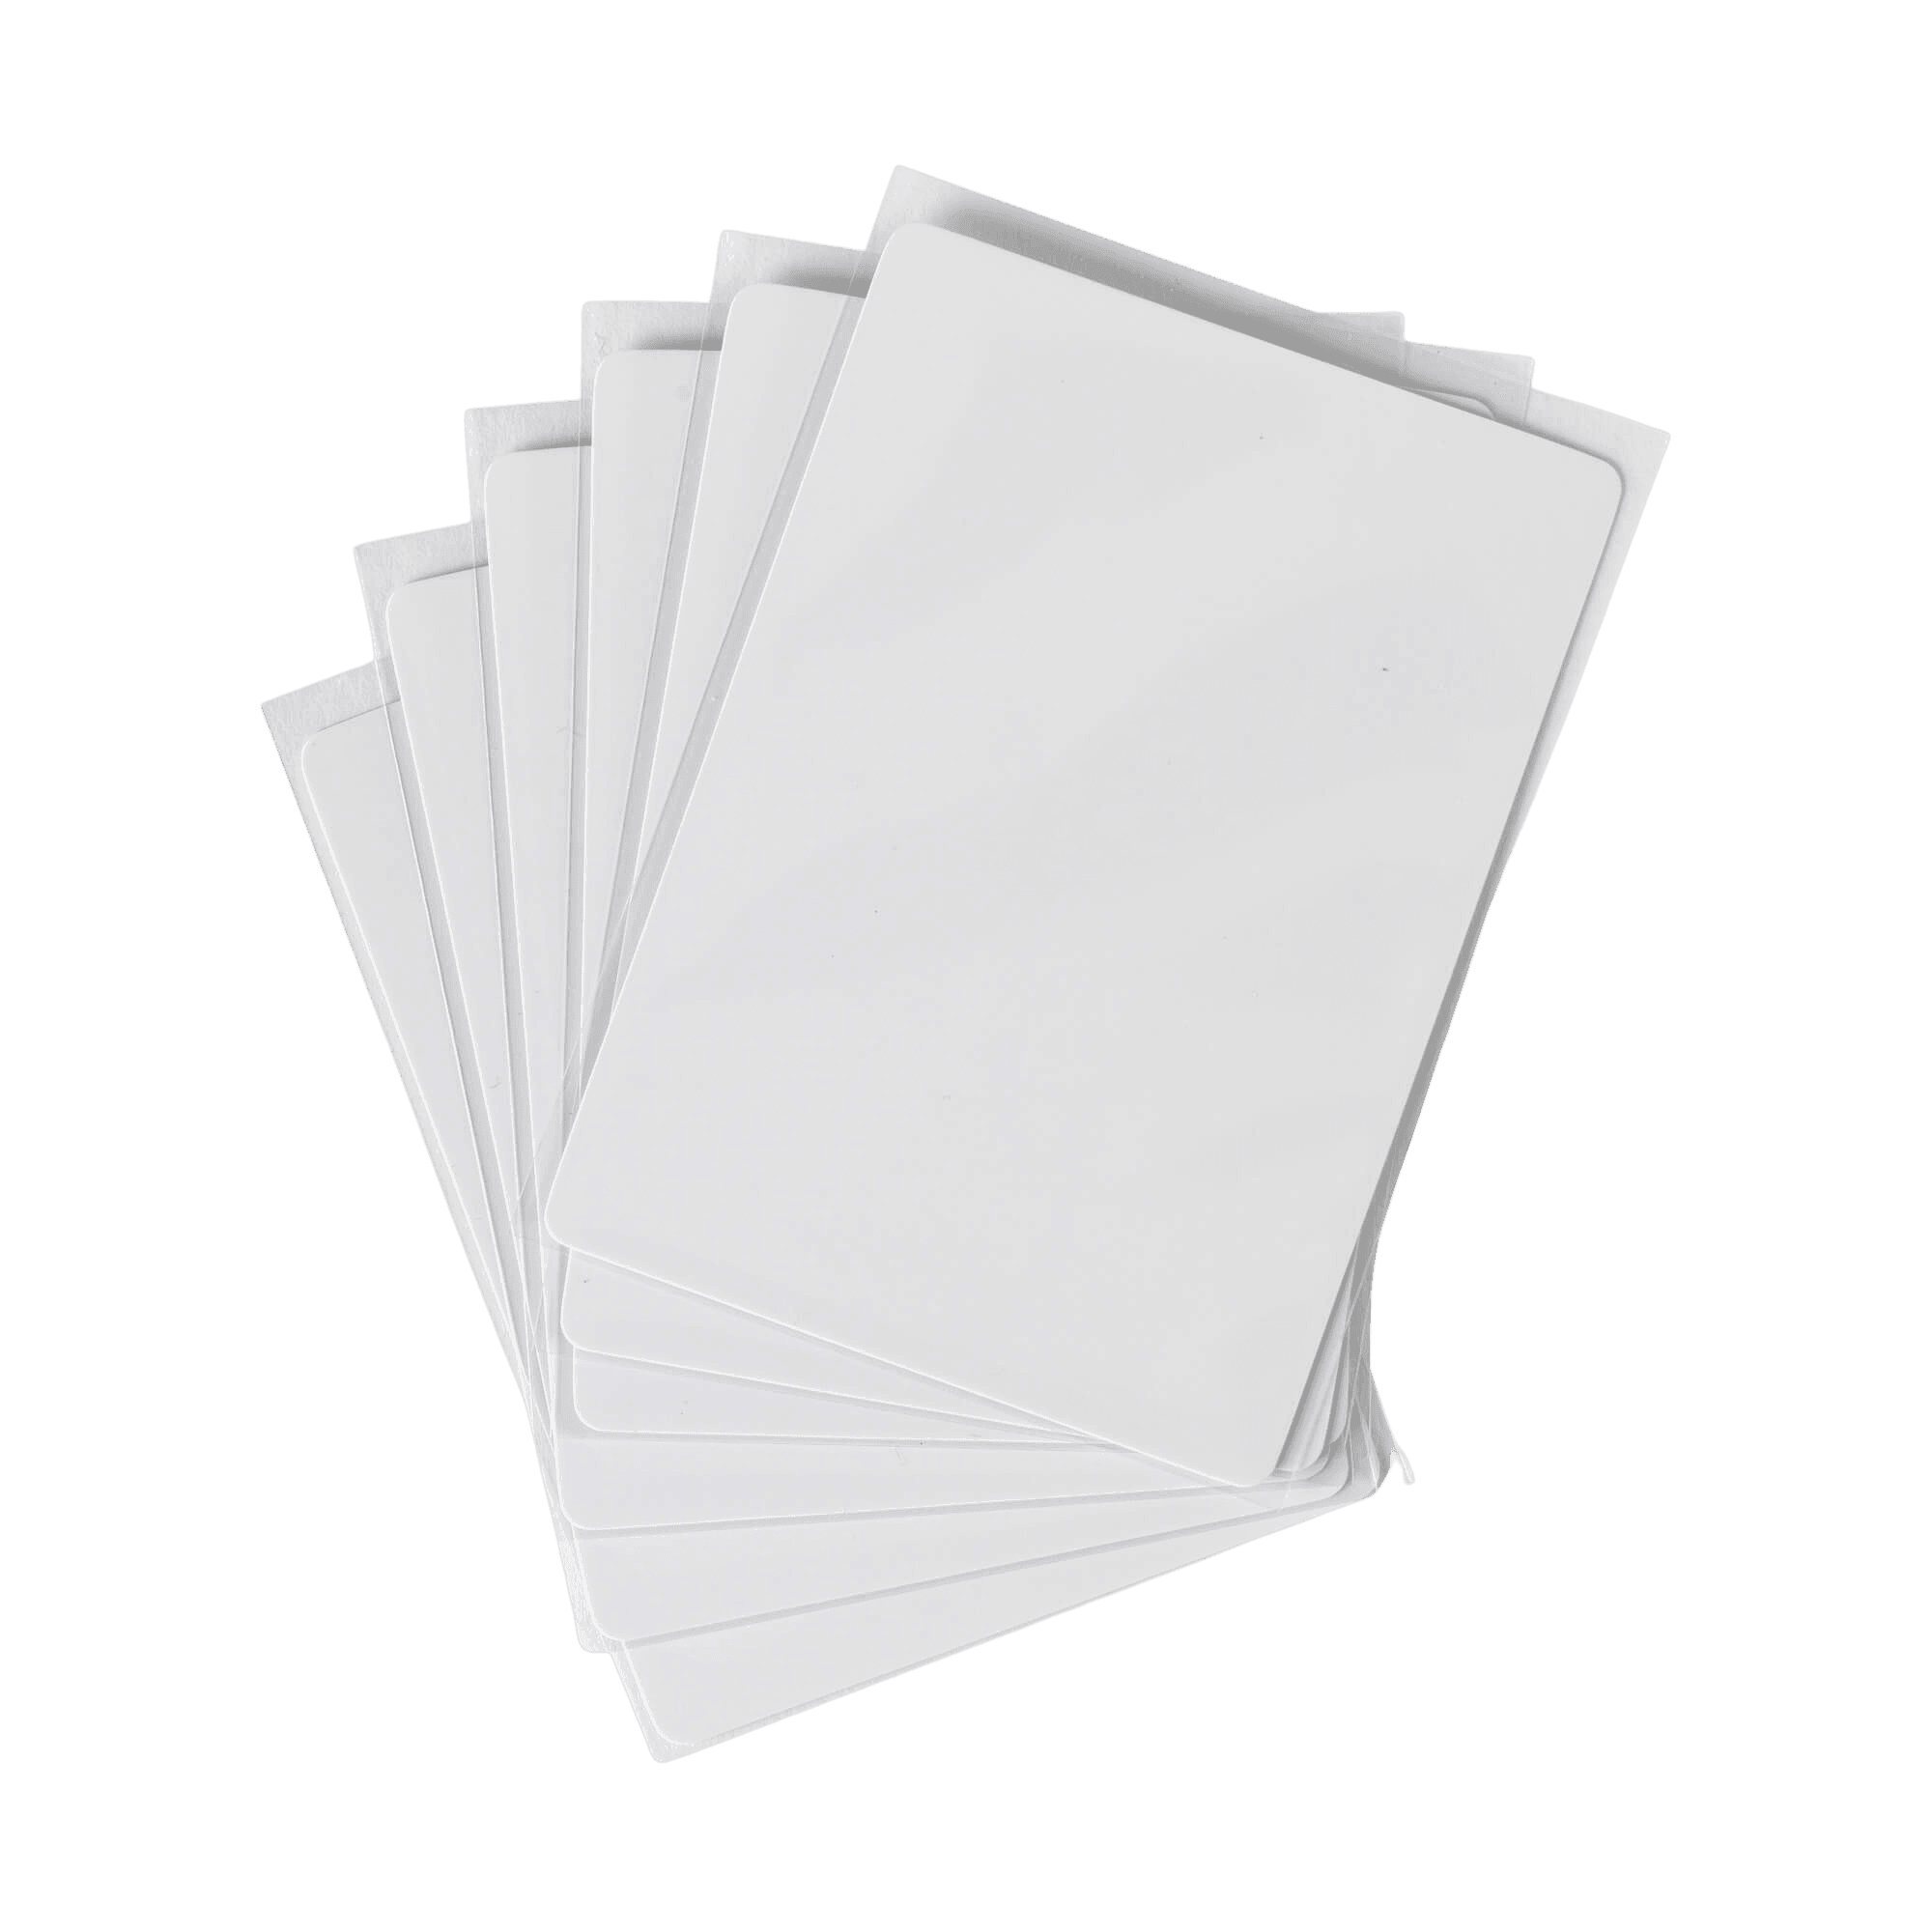 Vault X Soft Card Sleeves (200 Pack) - The Card Vault